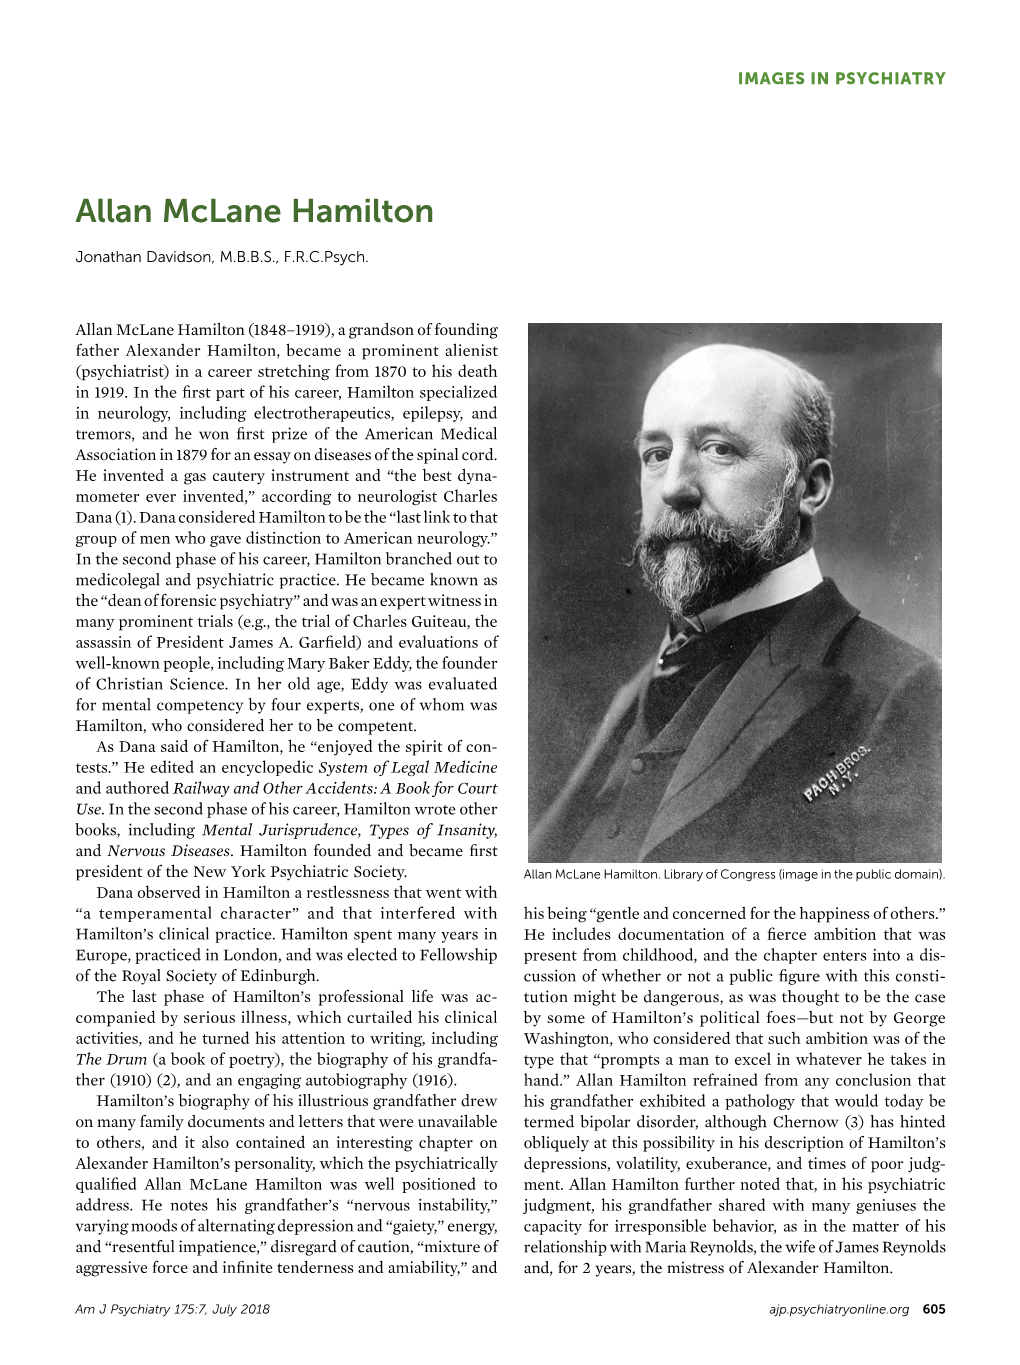 Allan Mclane Hamilton